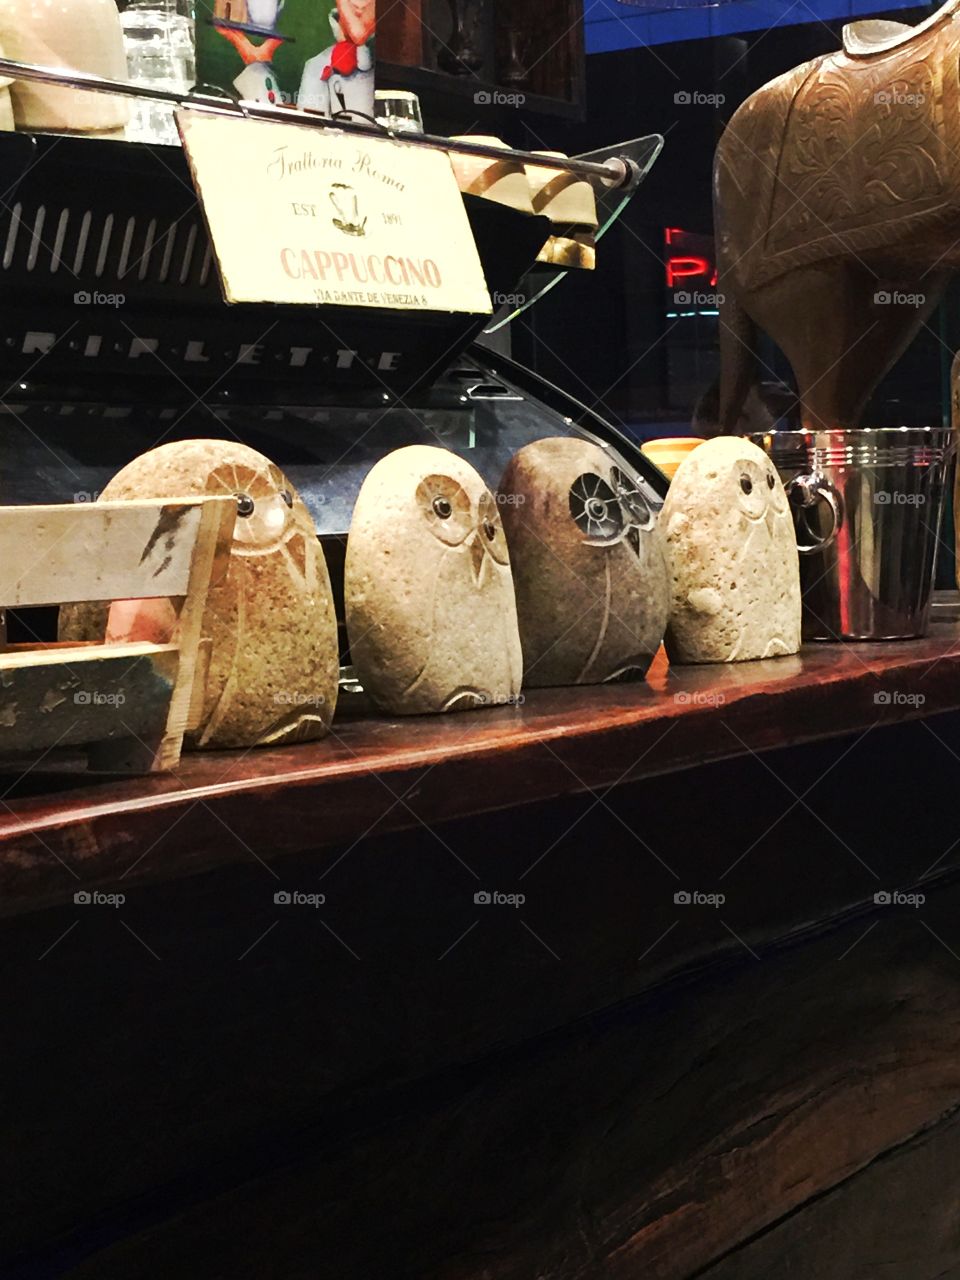 Owls is a Italian restaurant 